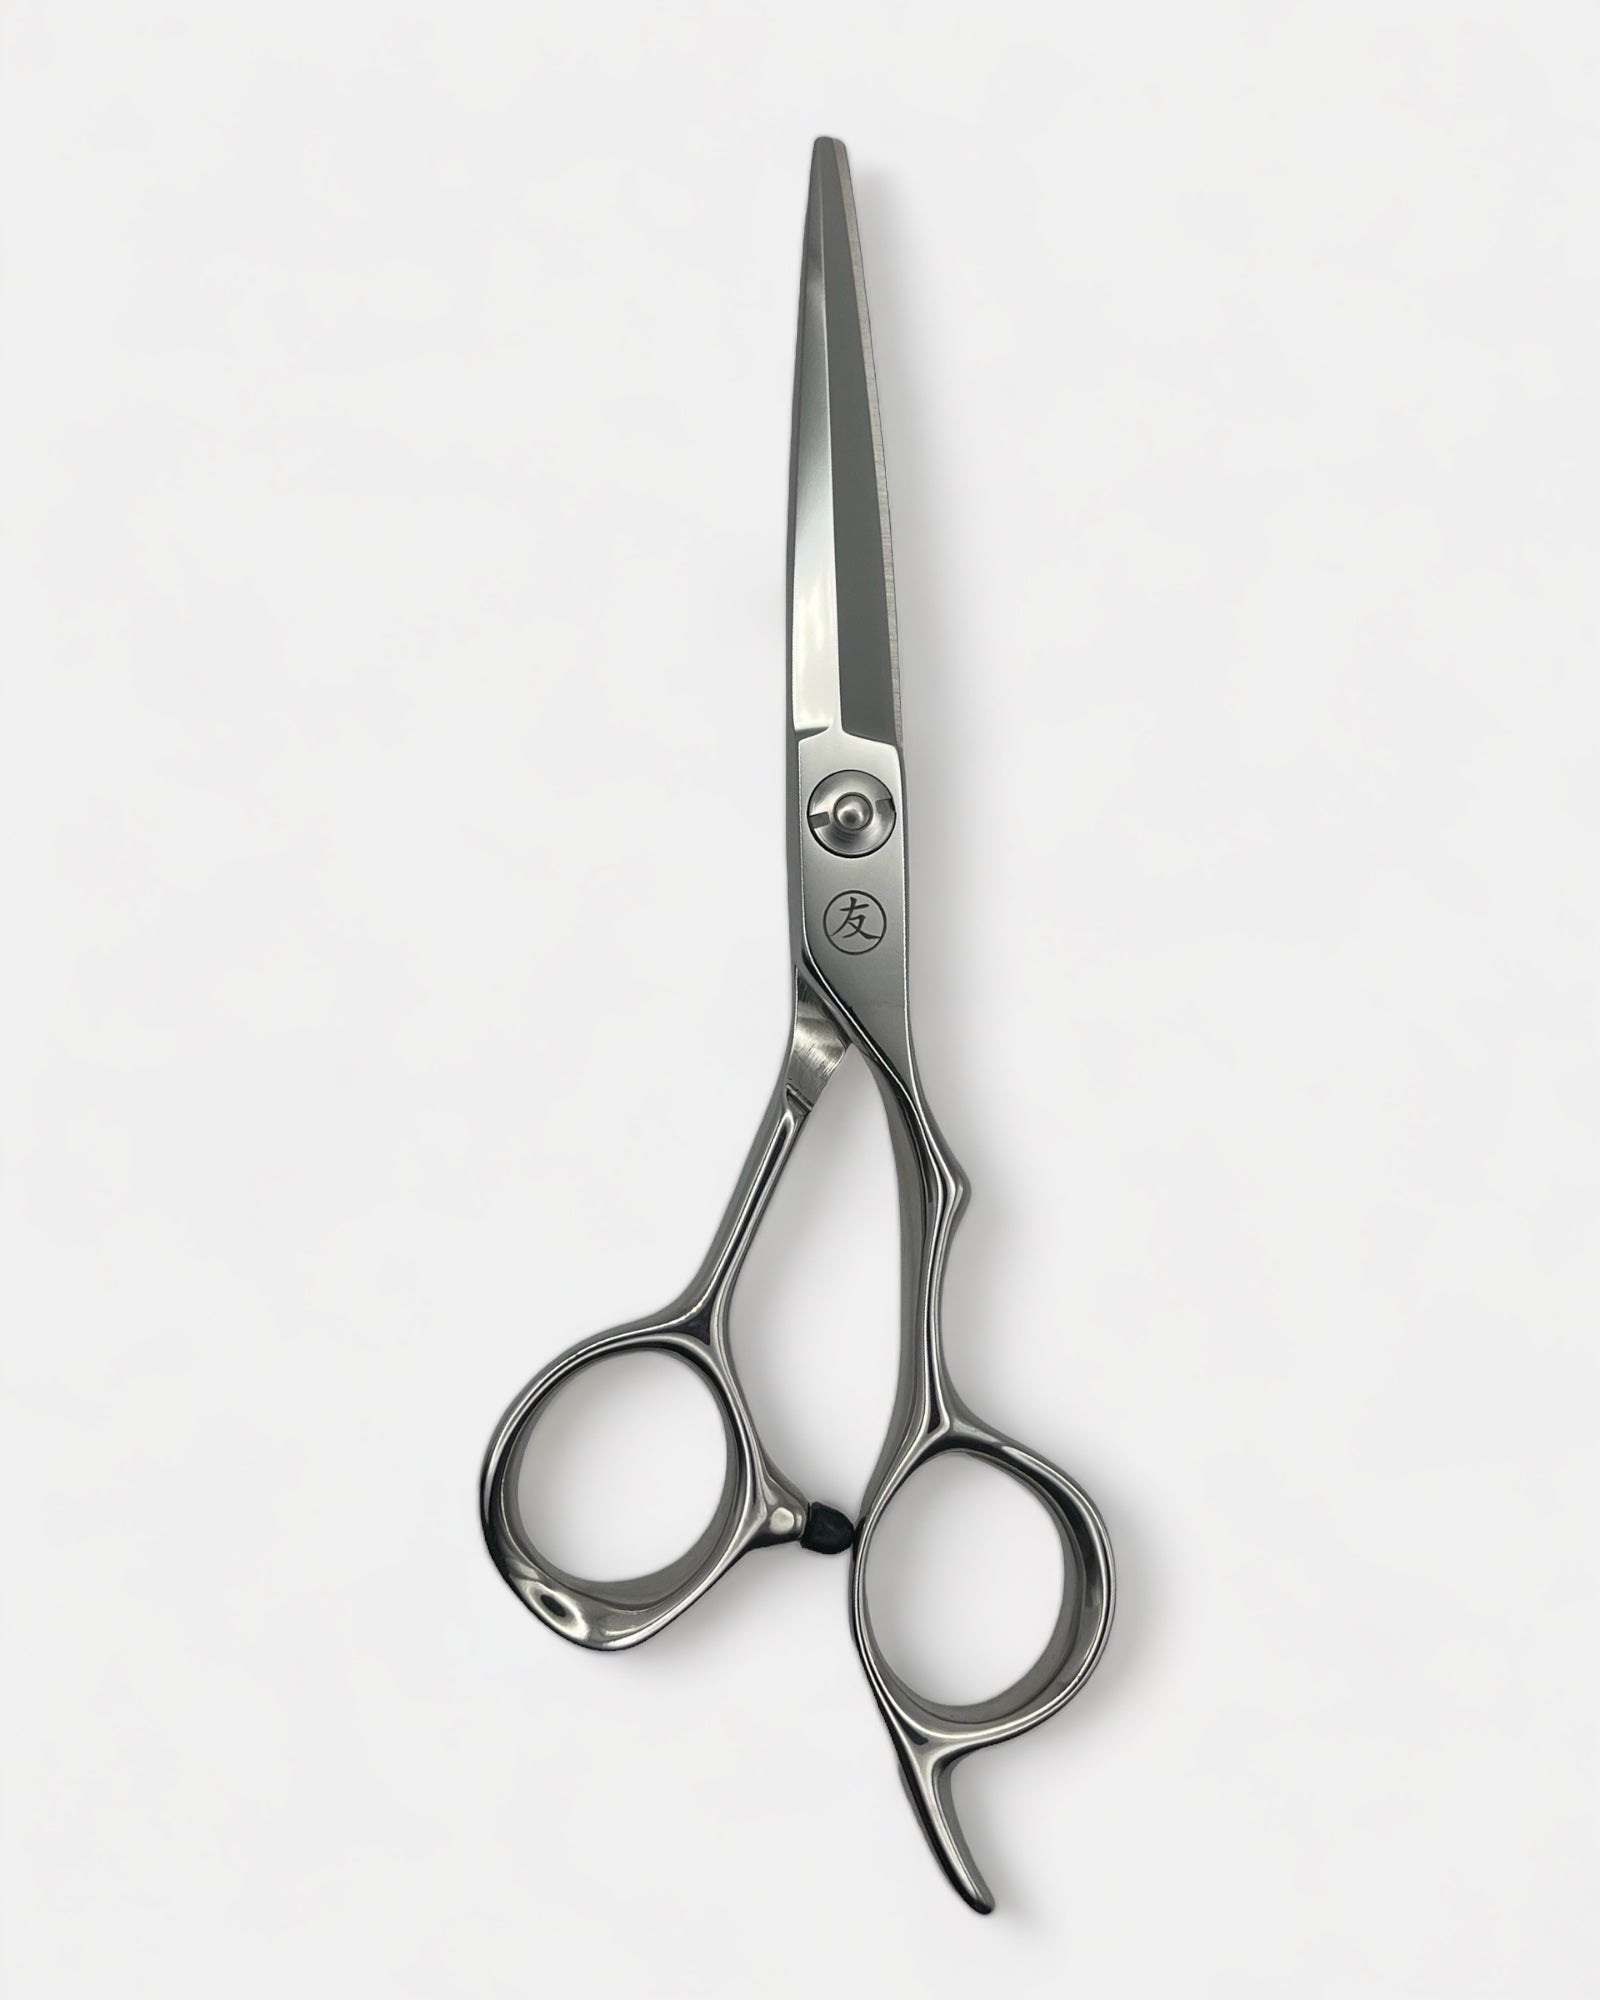 AK Z 1 Master Hairdressing Scissors in 5.5" Flat On Grey Background